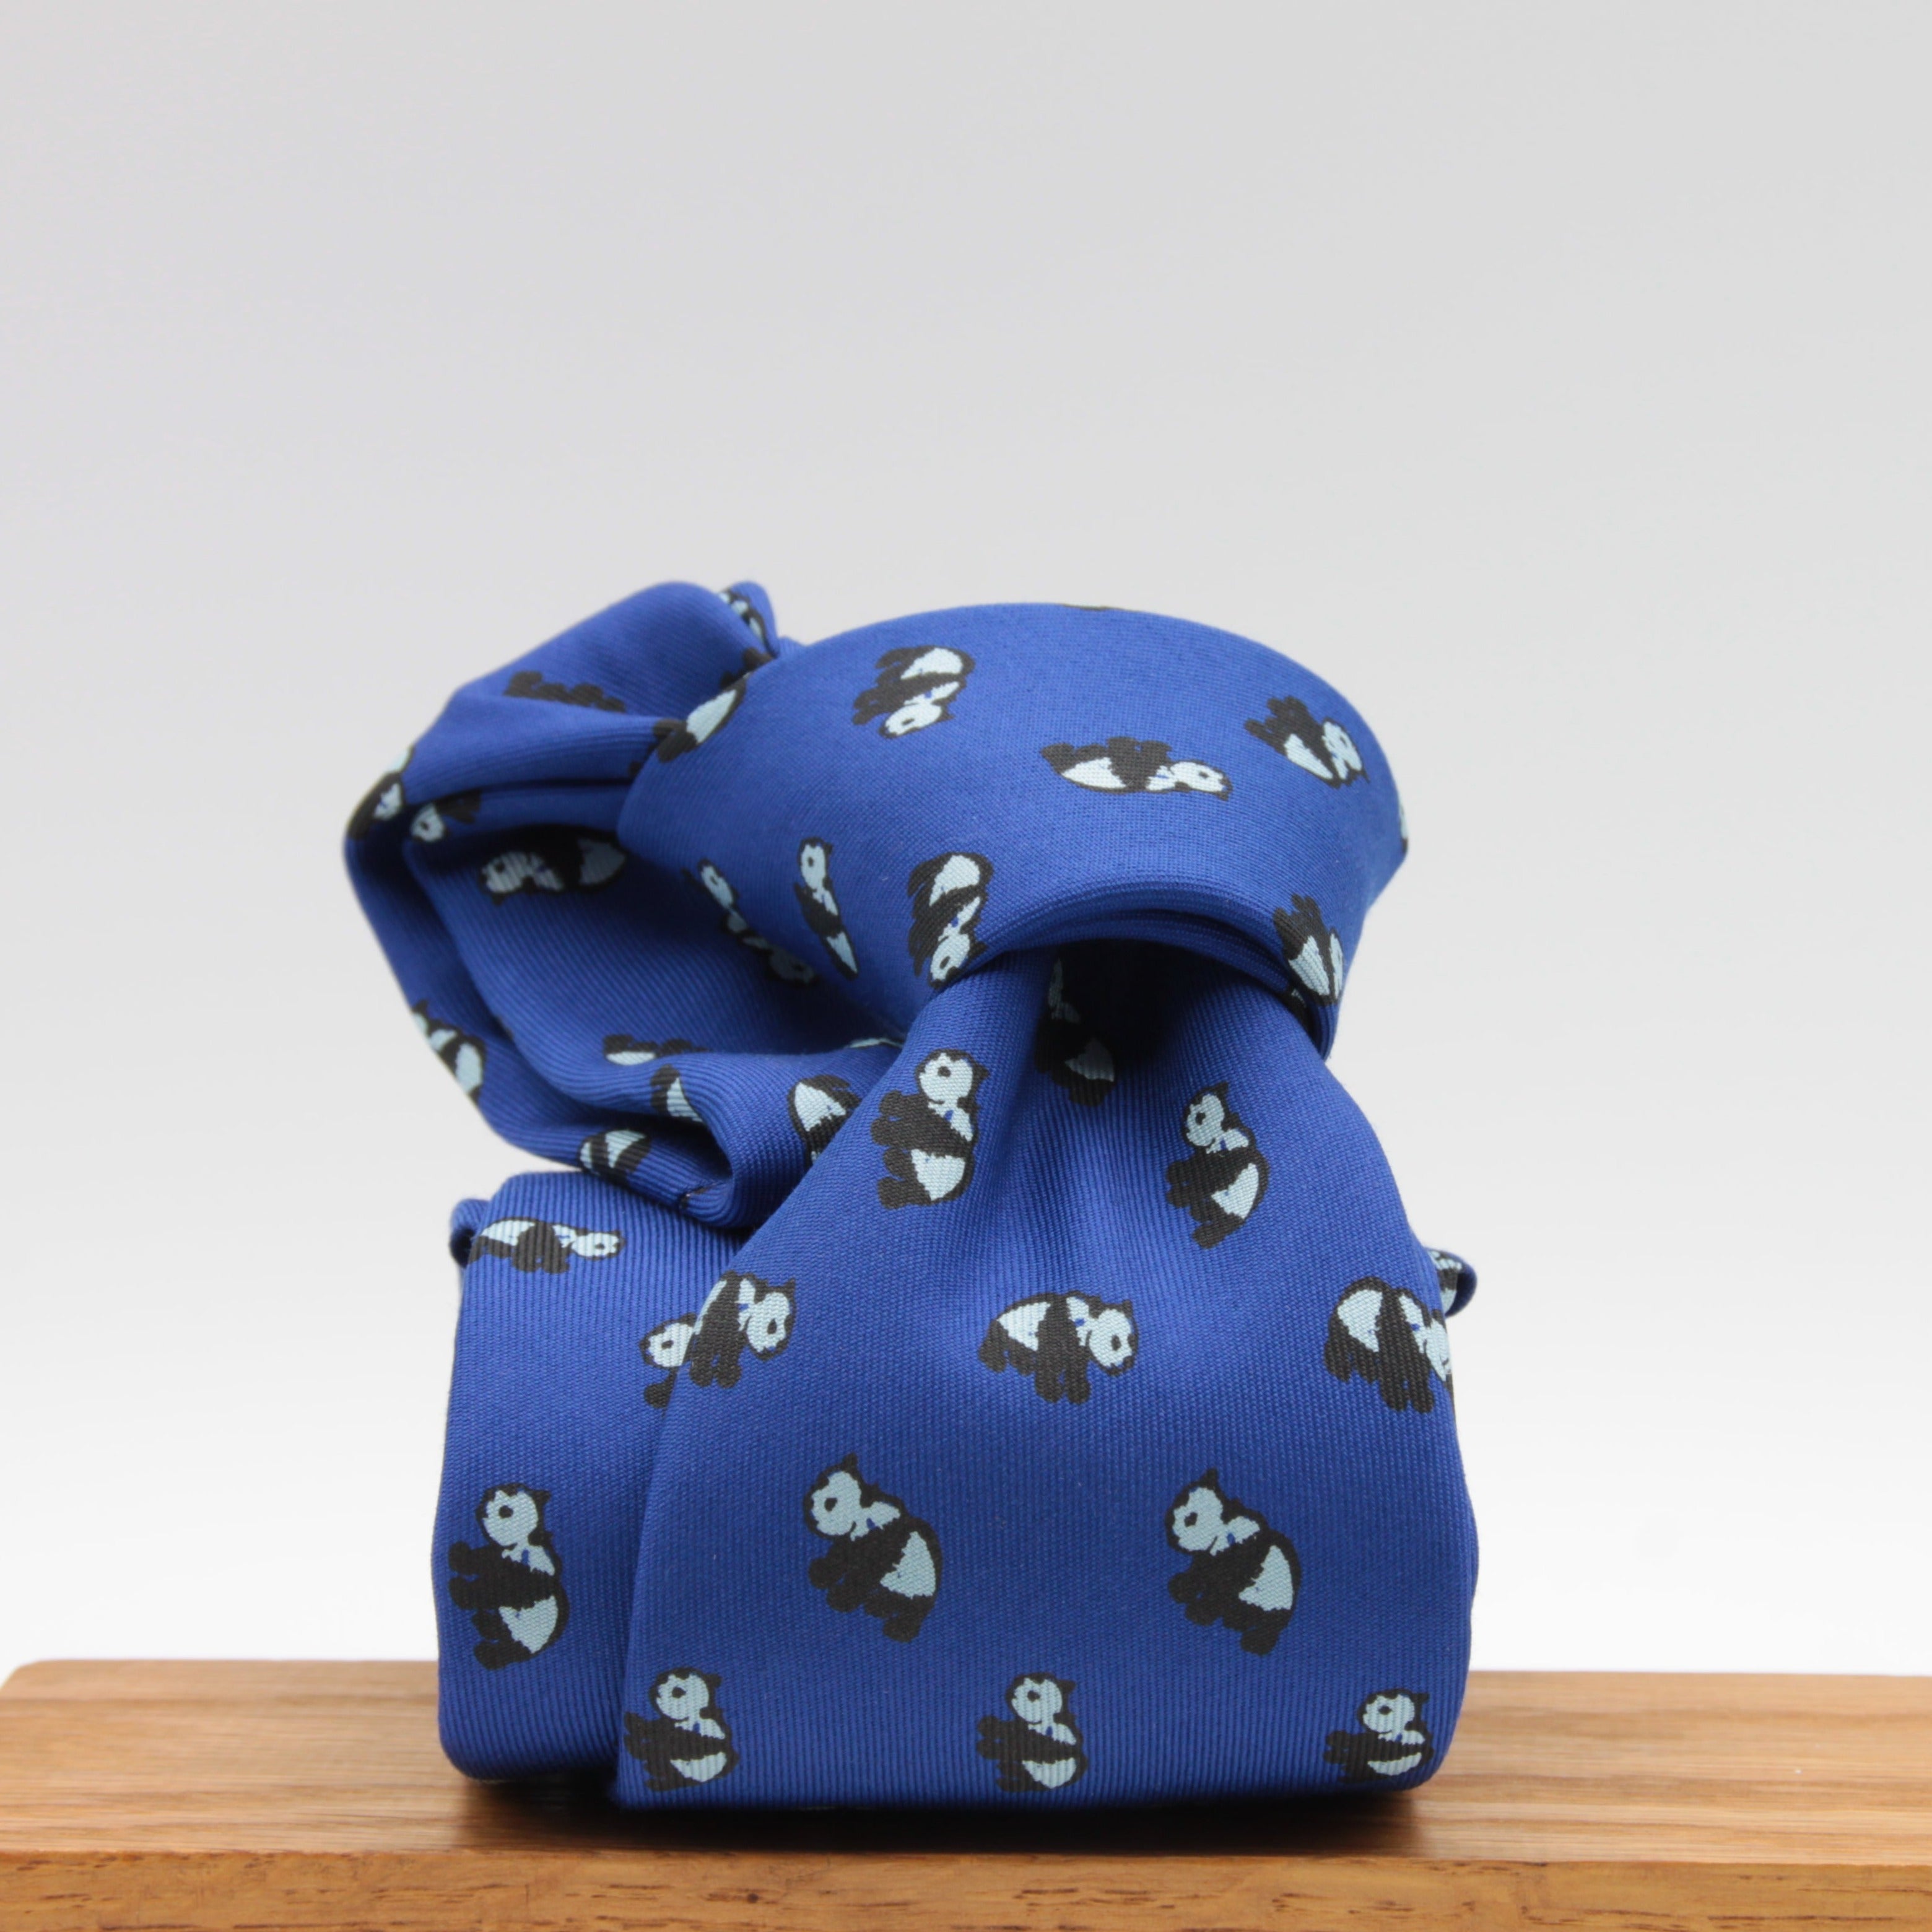 Drake's for Cruciani e Bella 100%  Printed Silk Tipped Electric Blue, White and Black Panda Motif Tie 36 oz Handmade in London, England 8 cm x 150 cm #3845